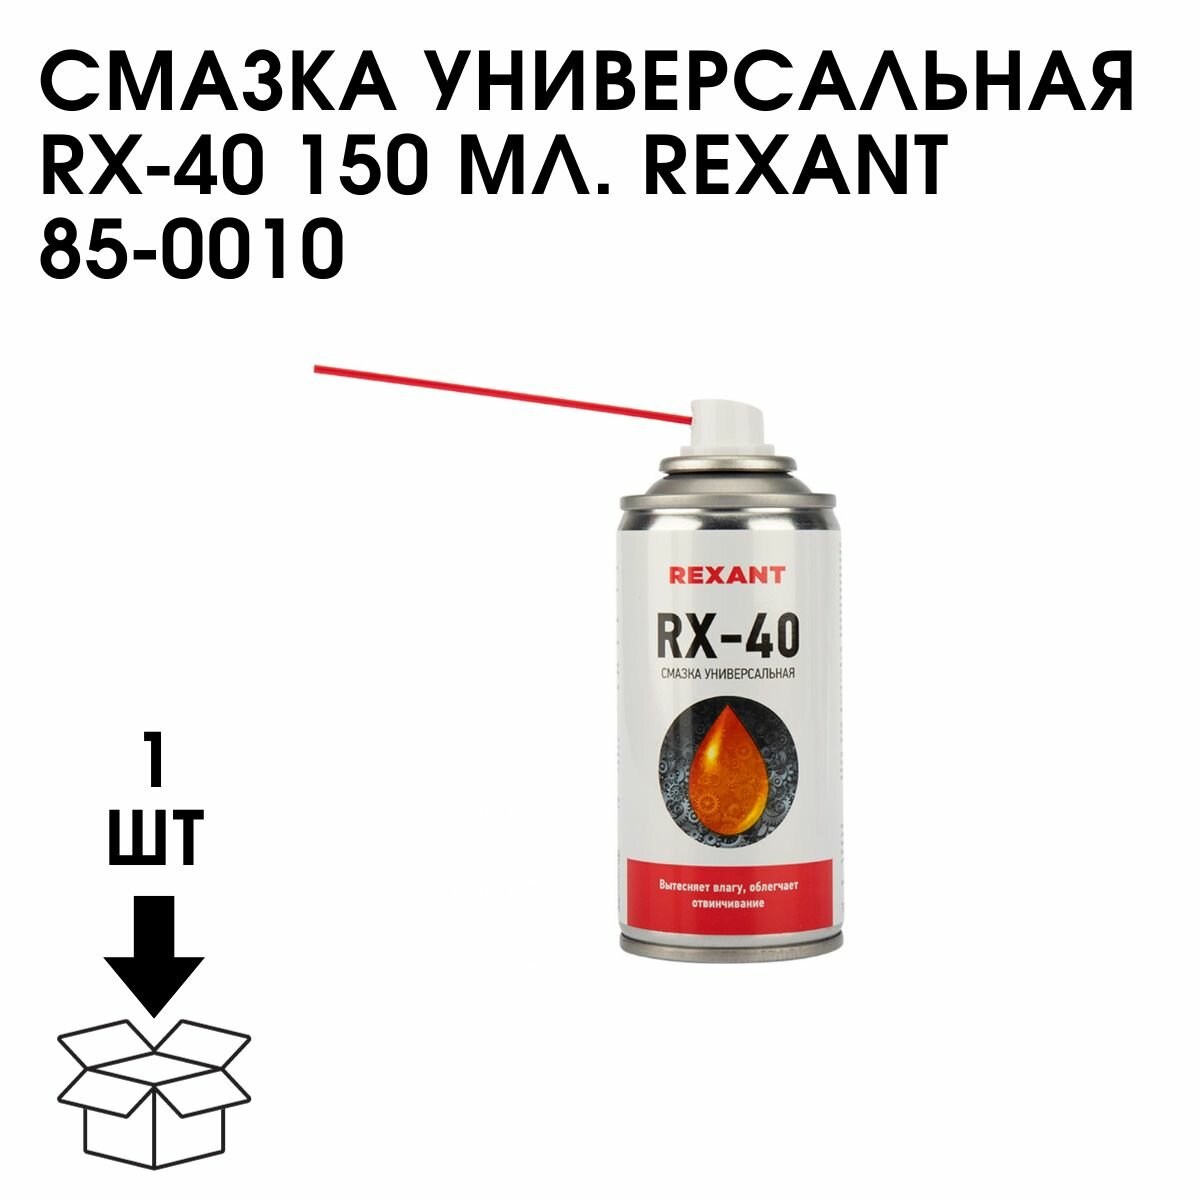 Смазка Универсальная RX-40 150 МЛ. REXANT 85-0010